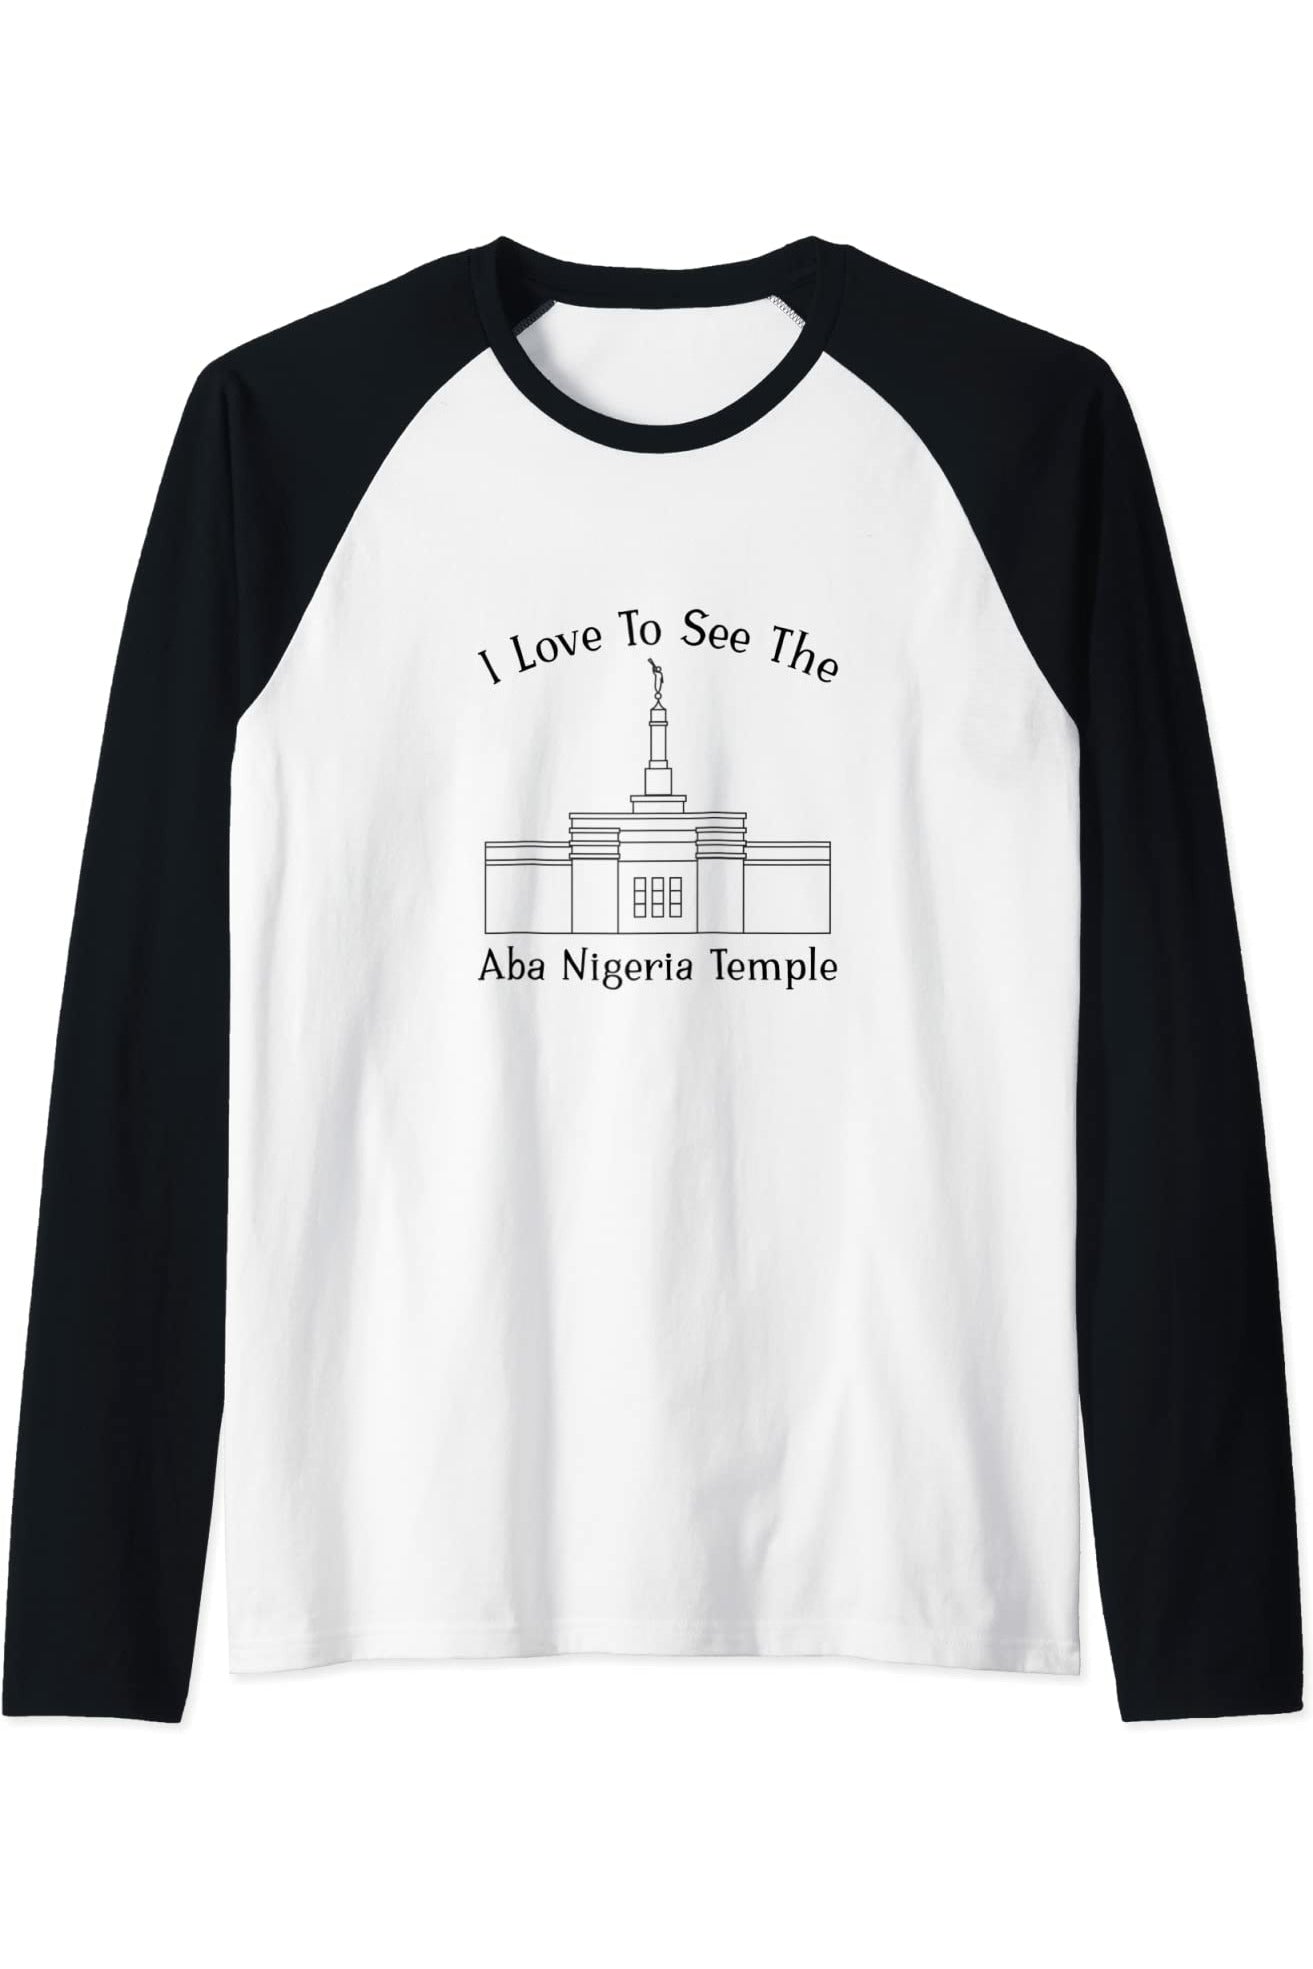 Aba Nigeria Temple Raglan - Happy Style (English) US